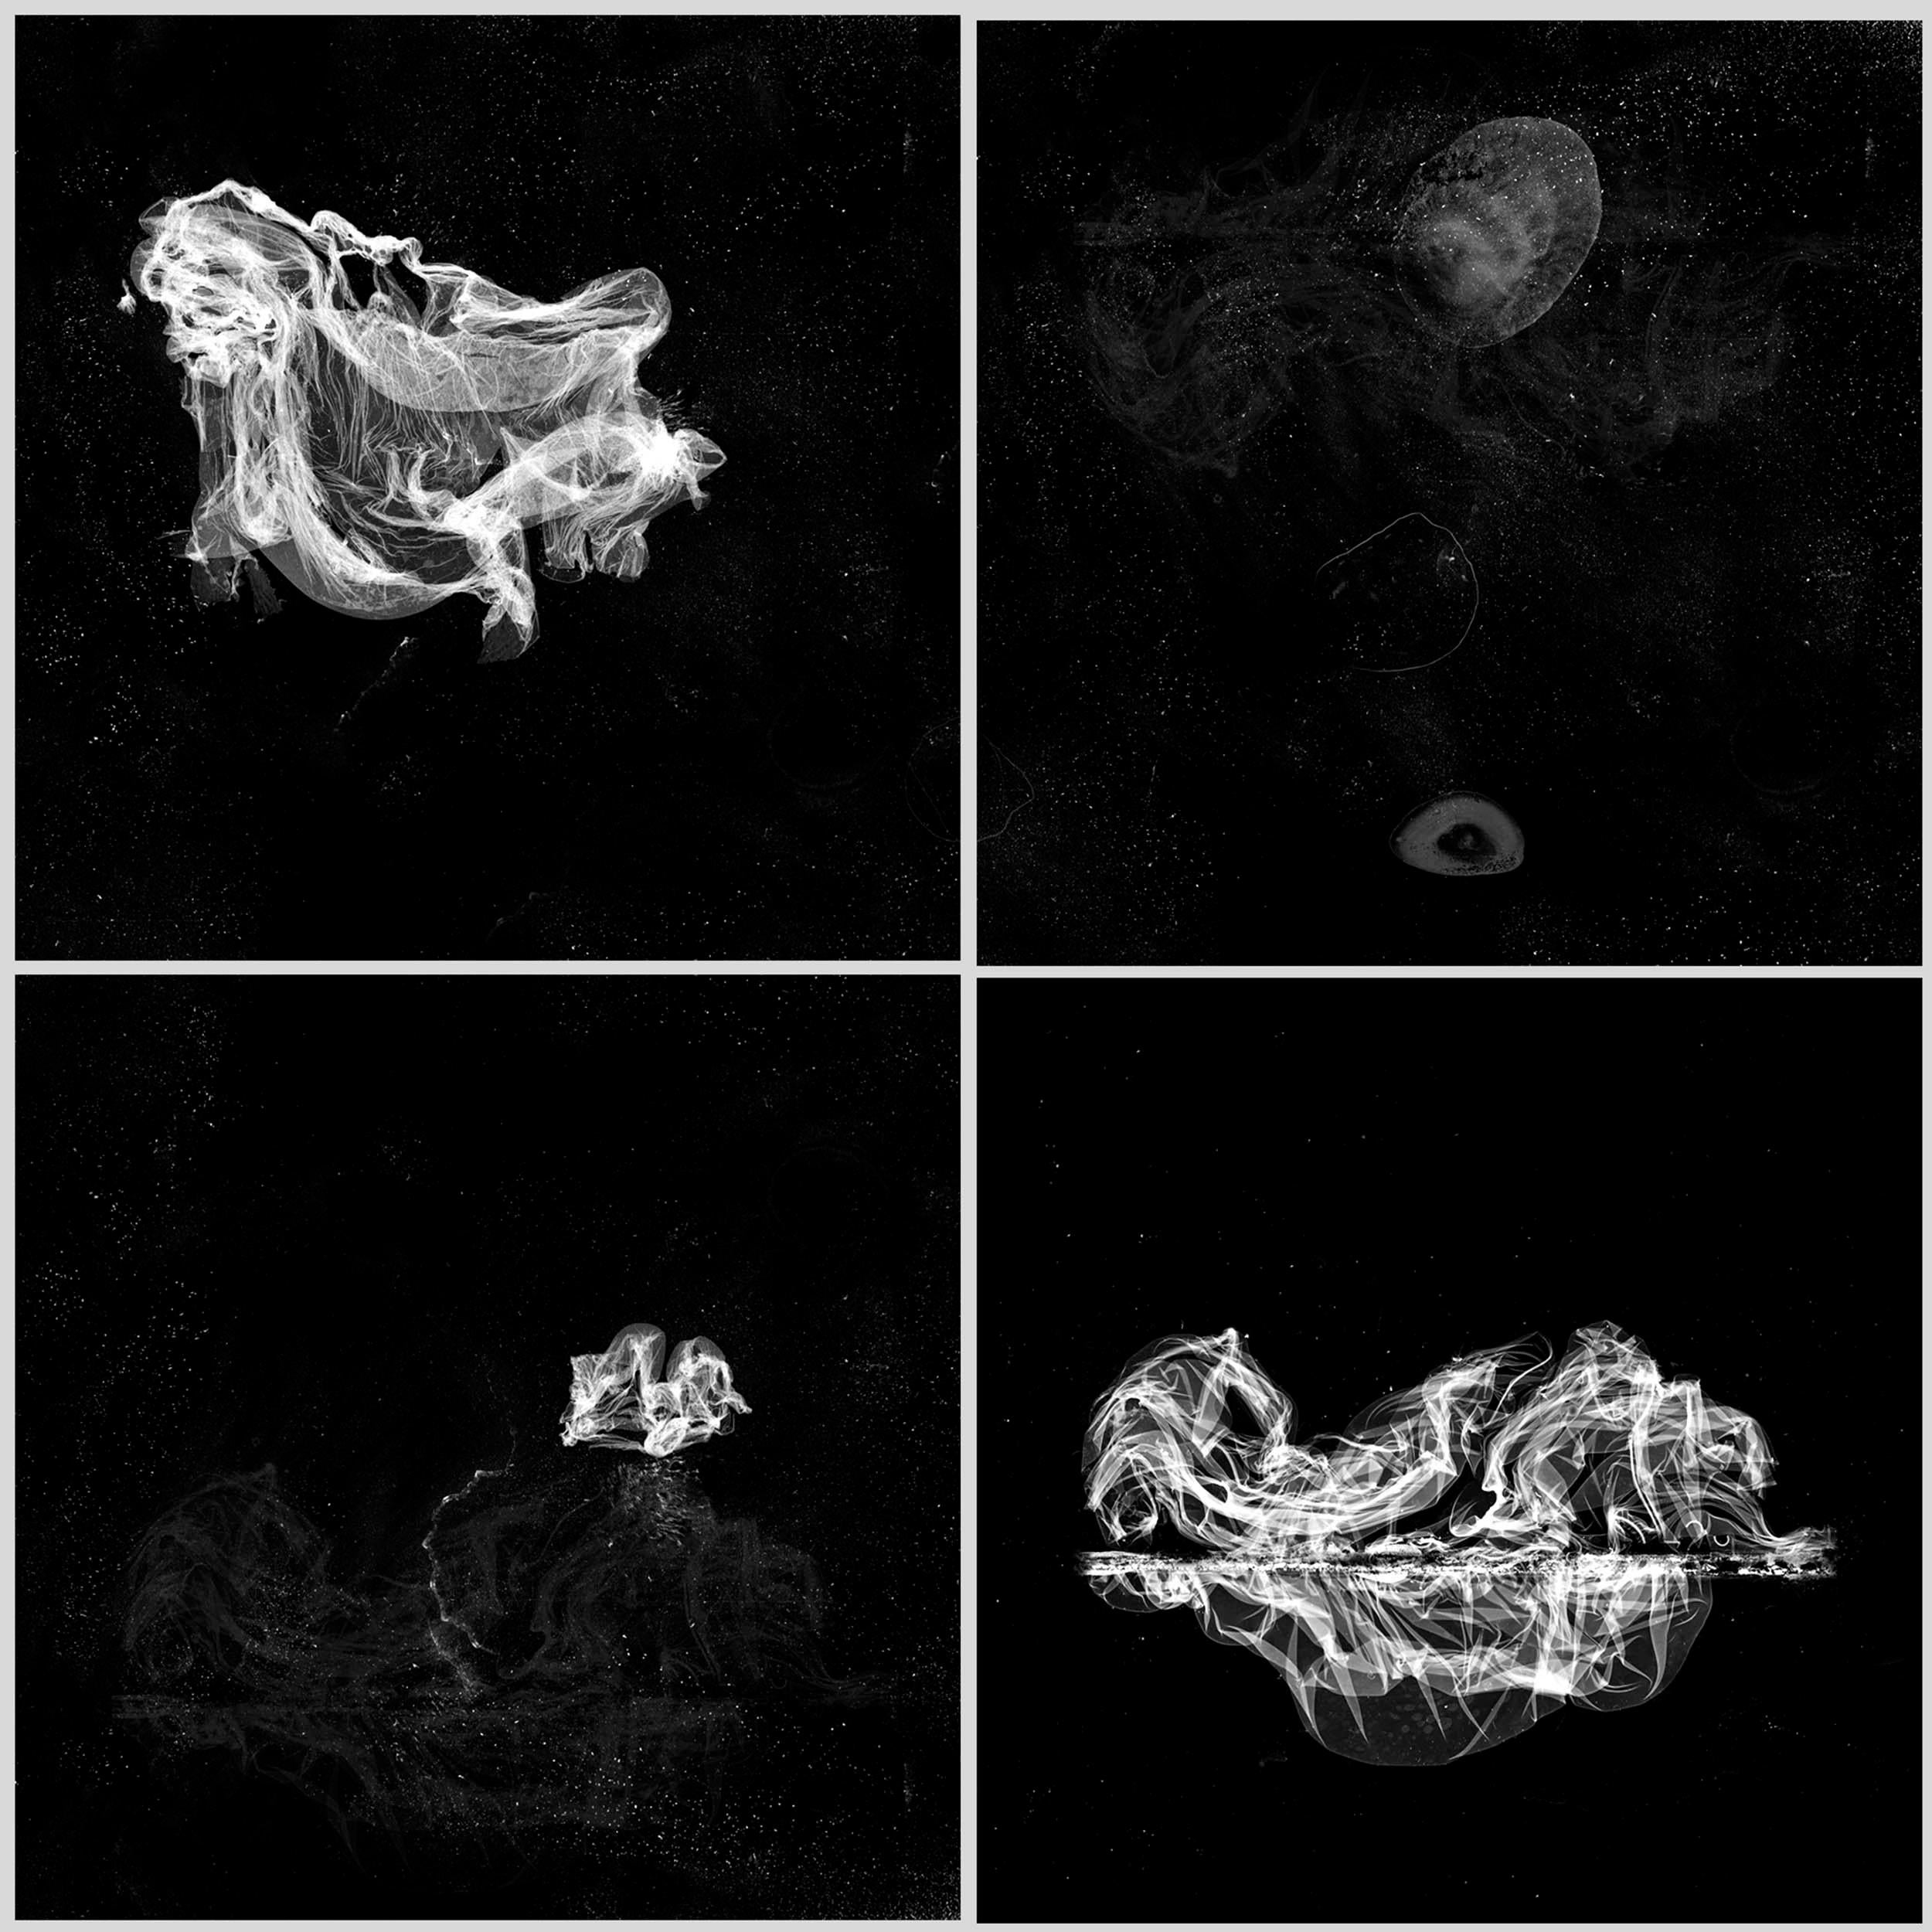 Osheen Harruthoonyan Abstract Photograph – Morphogenesis, zeitgenössische Schwarz-Weiß-Fotografie, abstrakte, surreale Fotografie, selten